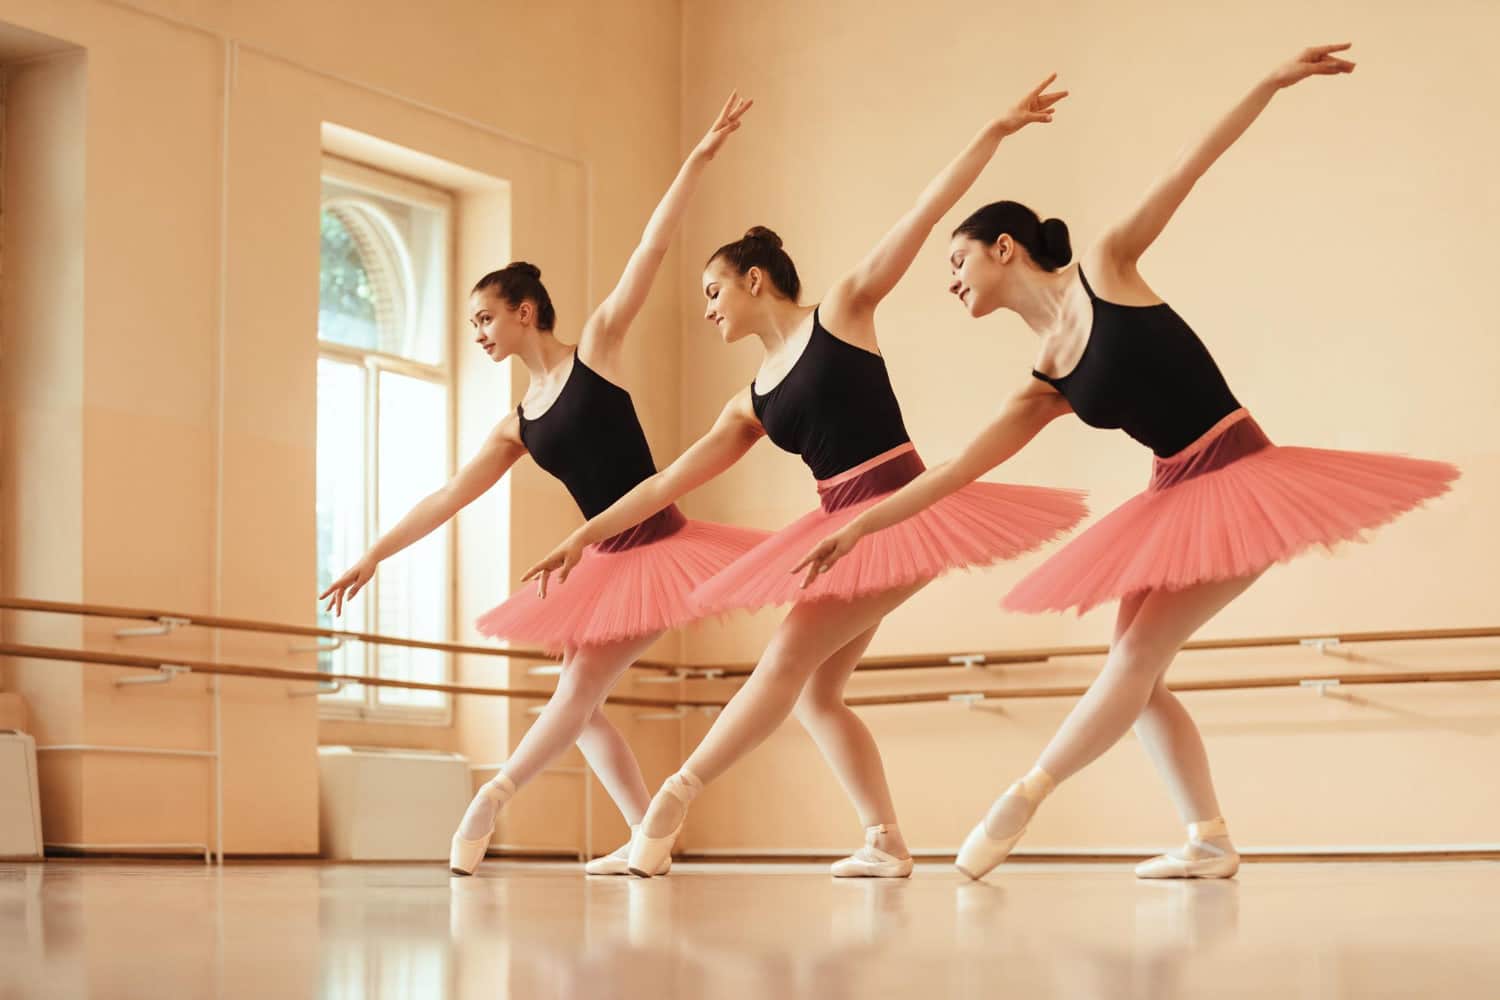 kompr small group of ballerinas dancing during rehearsal at ballet school